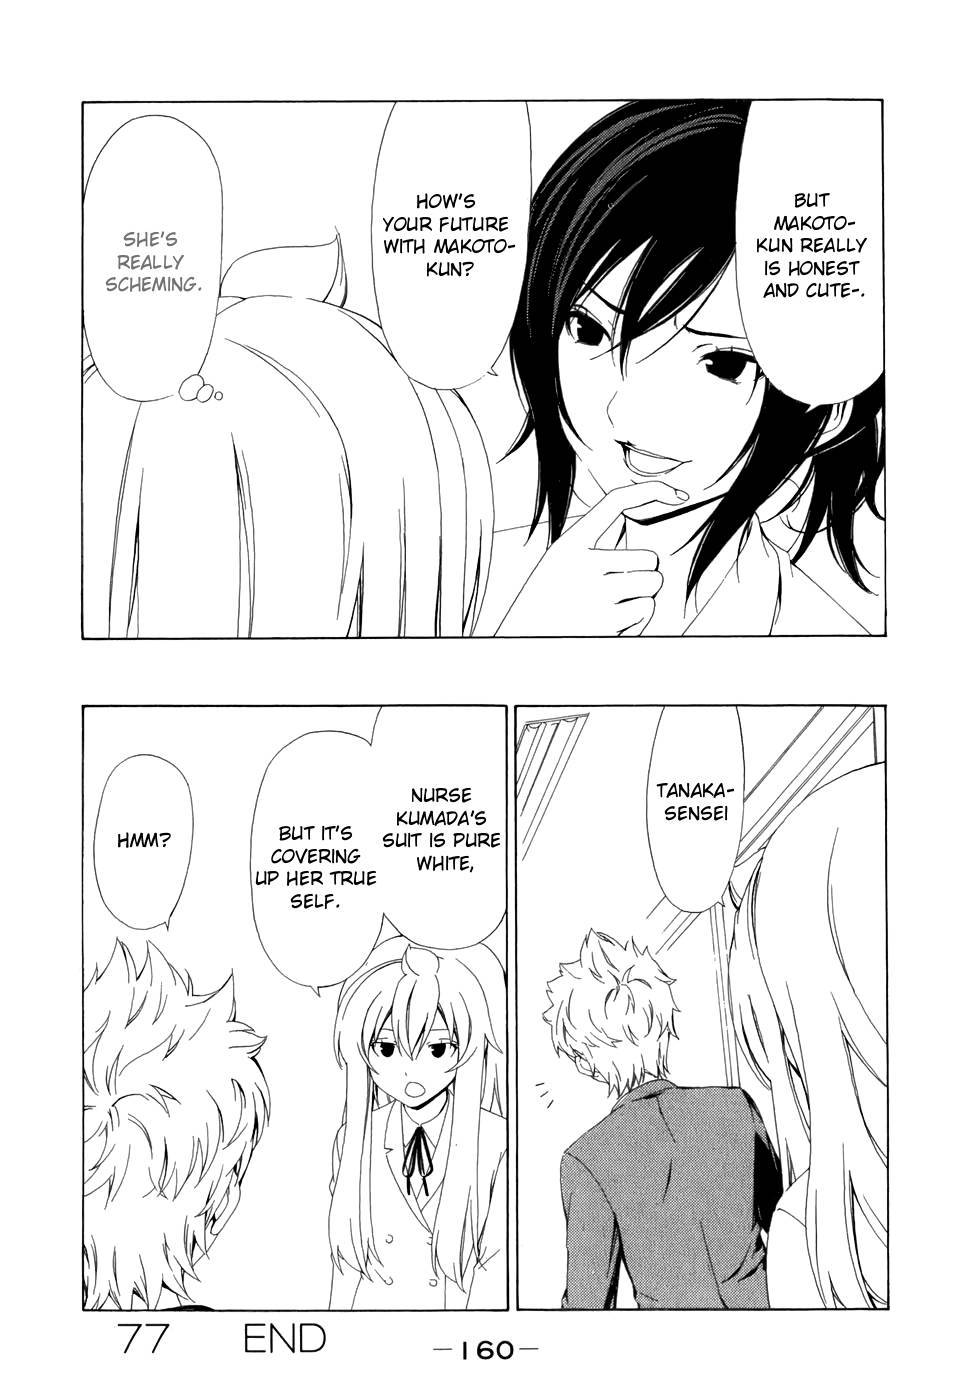 Minami-ke chapter 77 page 9